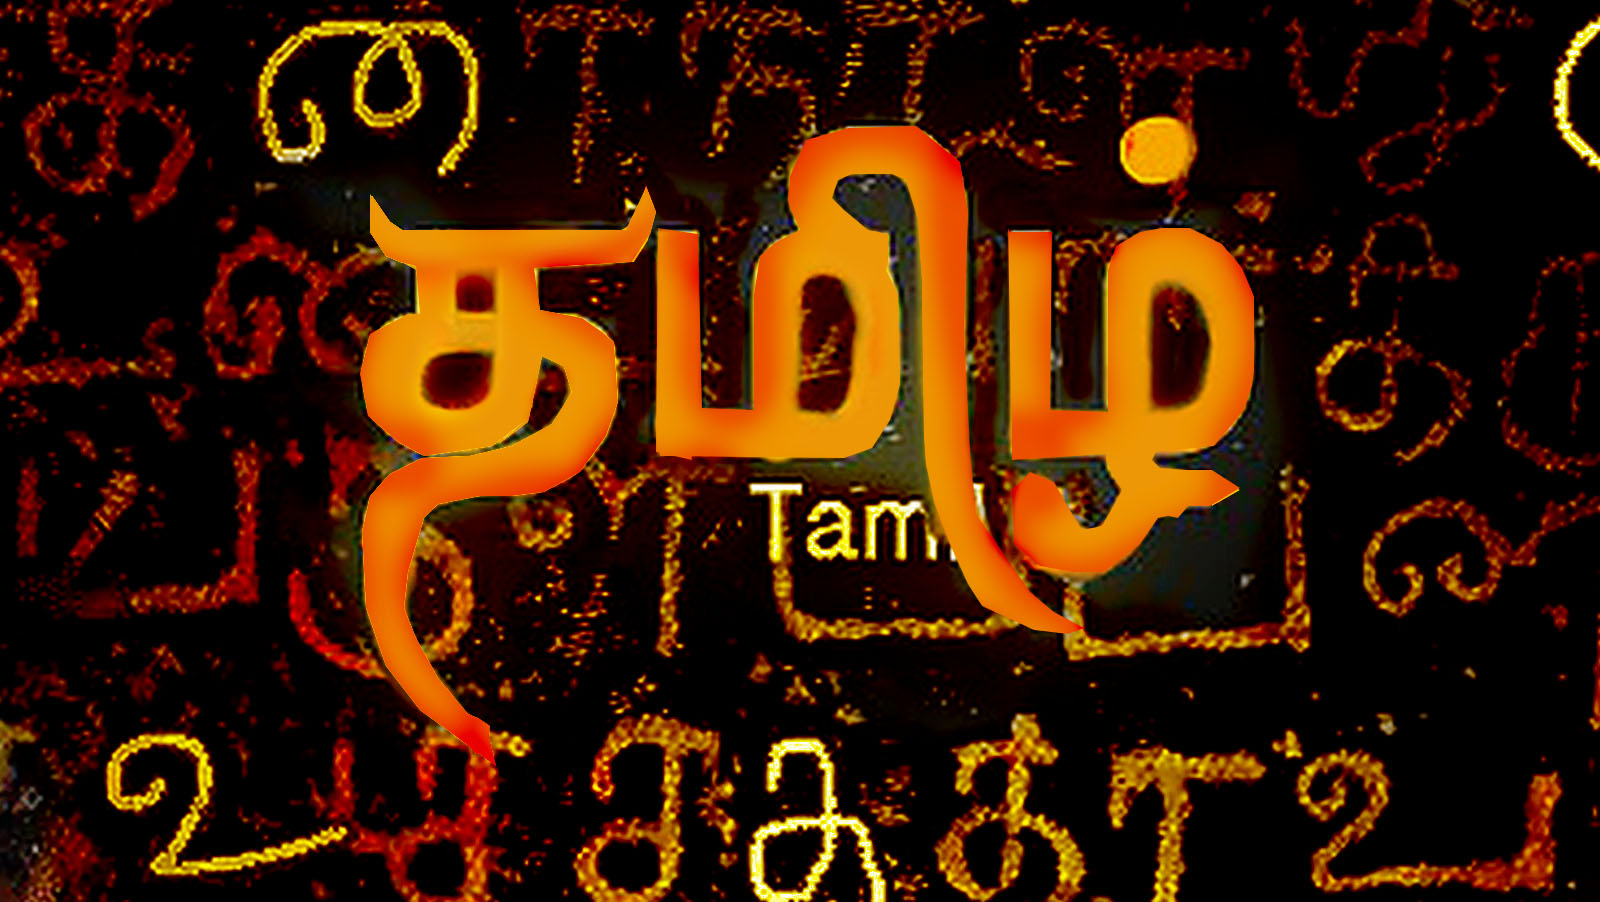 Second Language Tamil Pdf